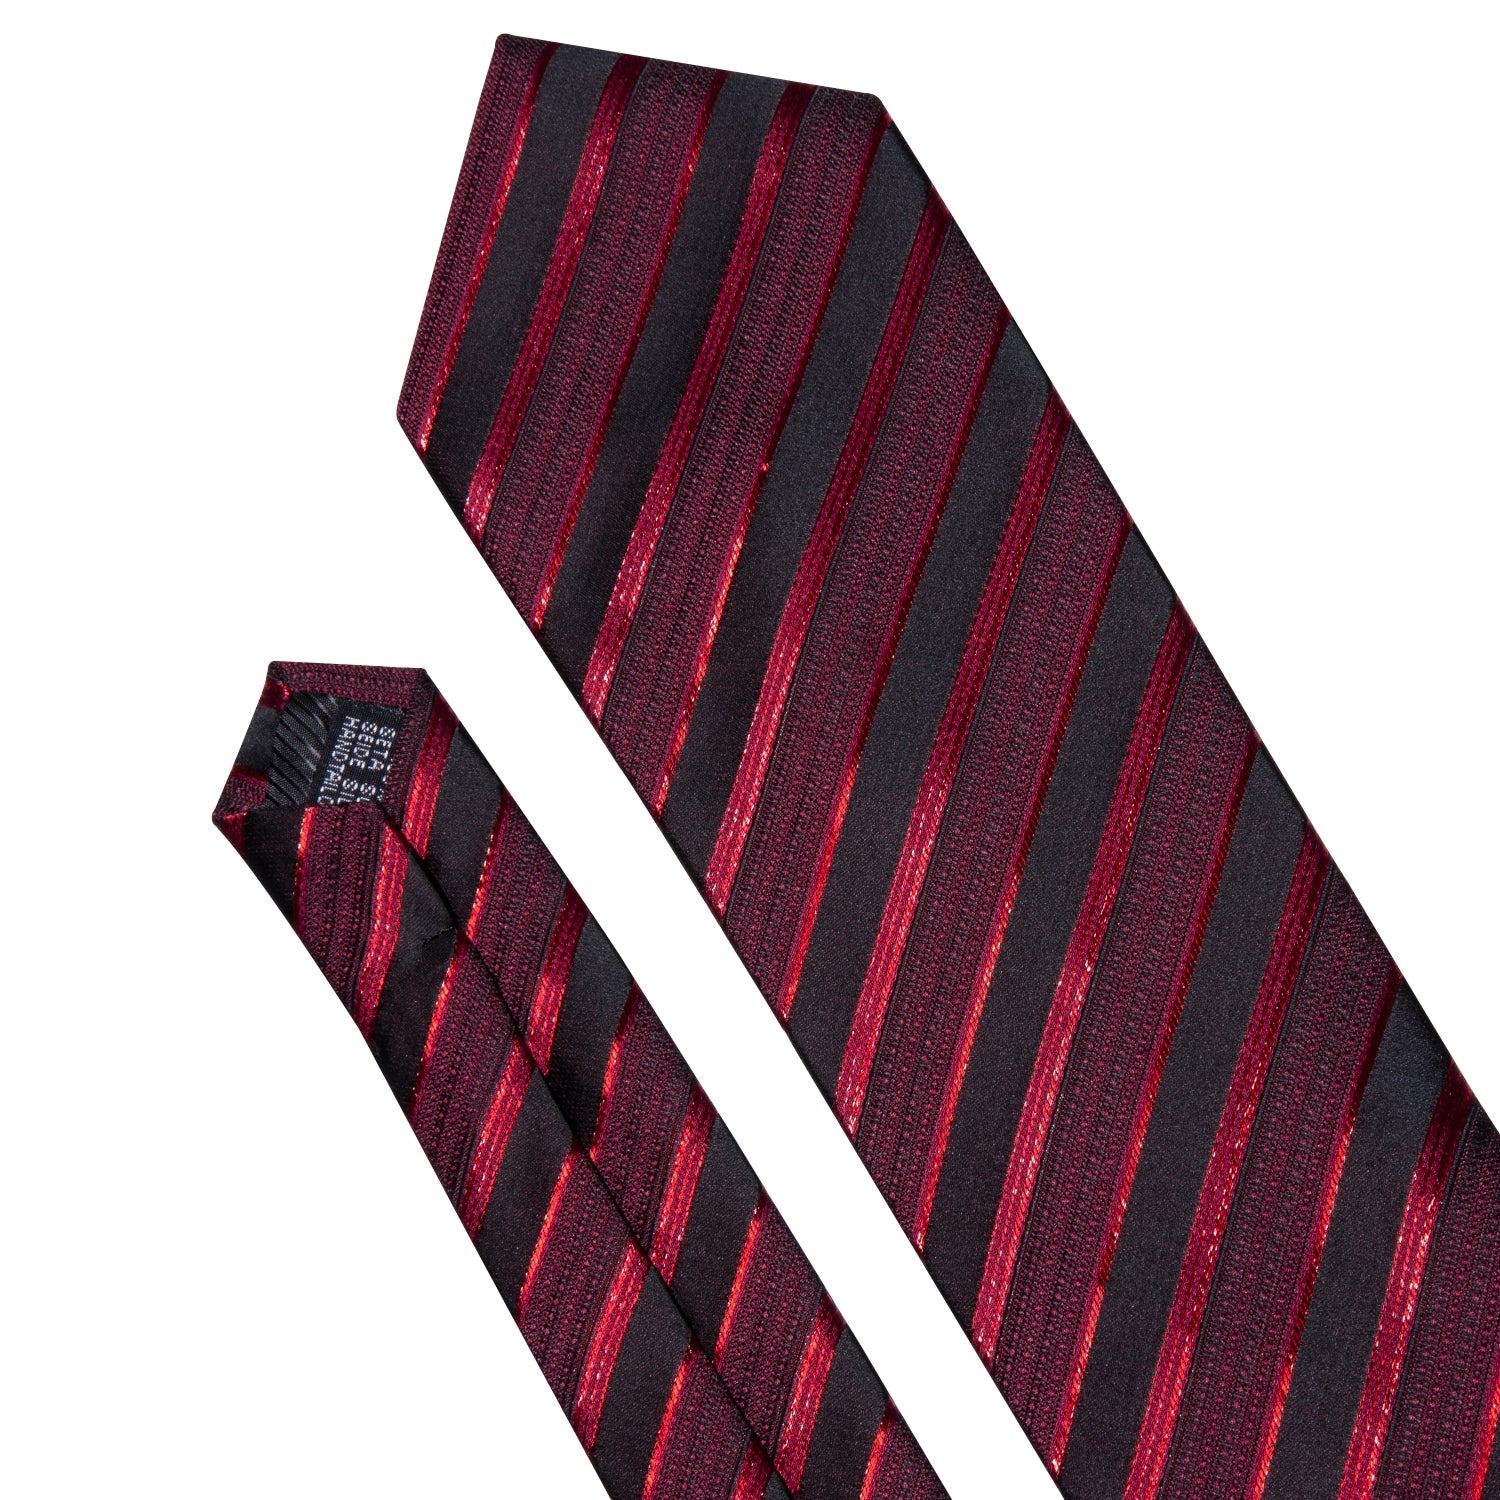 Barry.wang Red Tie Classic Stripe Silk Tie Pocket Square Cufflinks Set